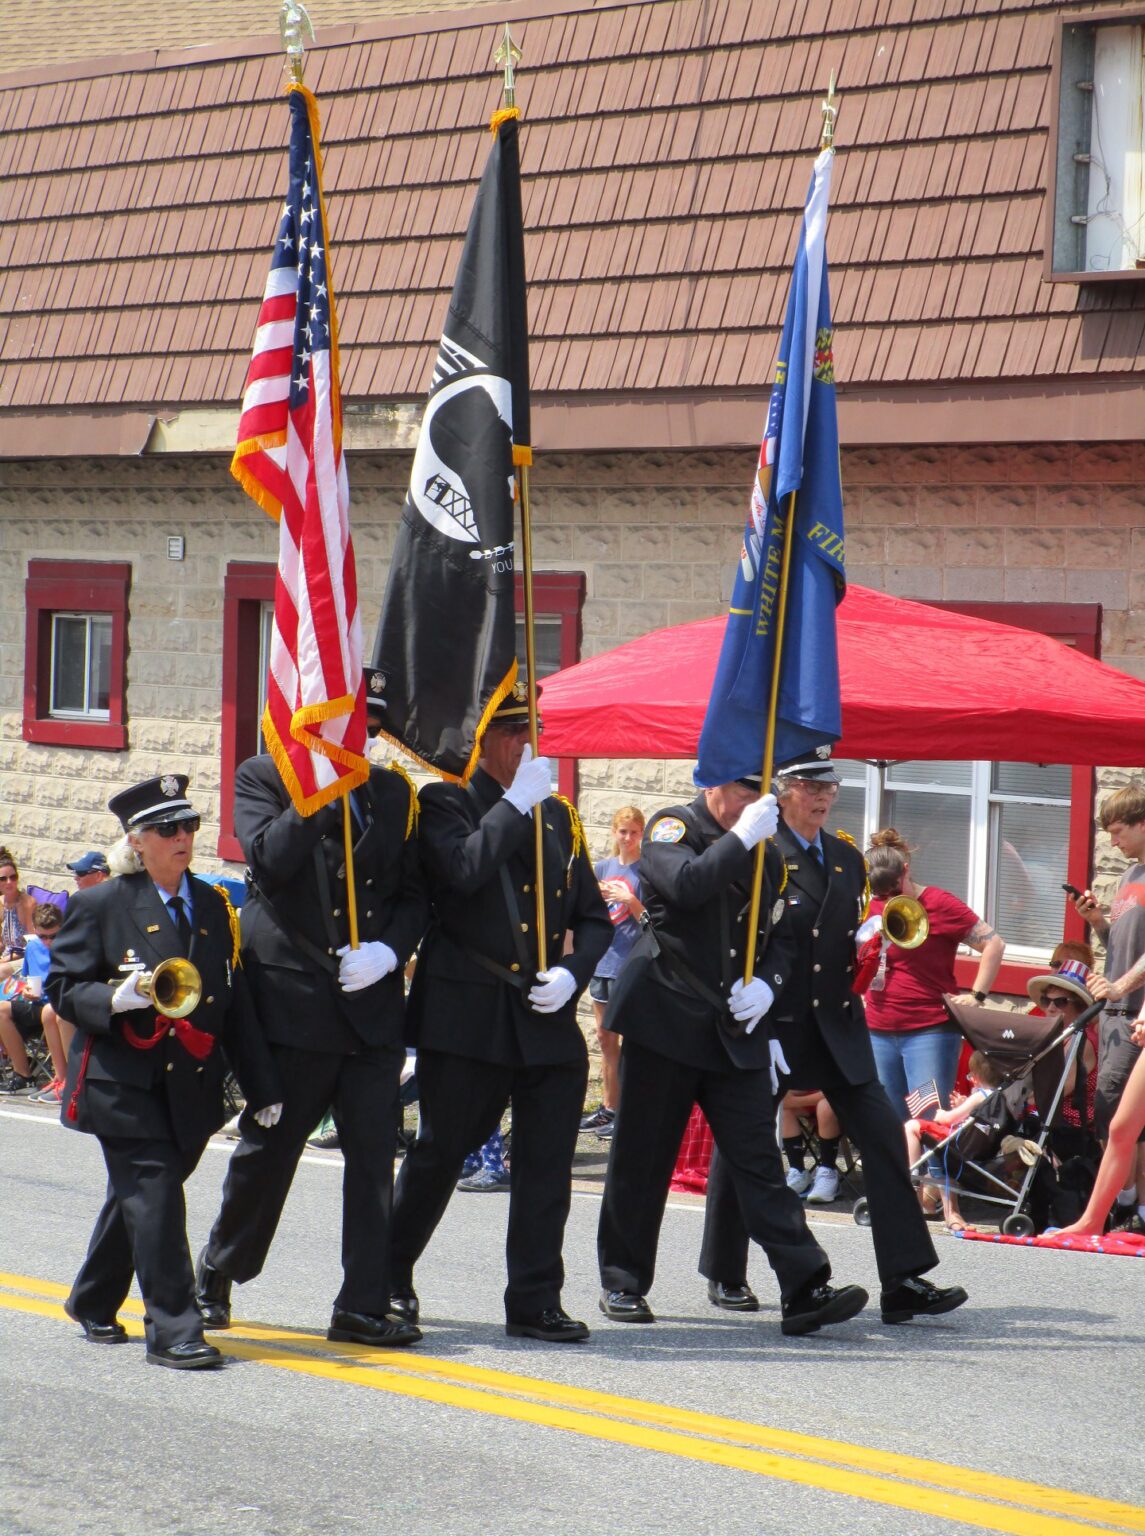 Kingsville Independence Day Parade